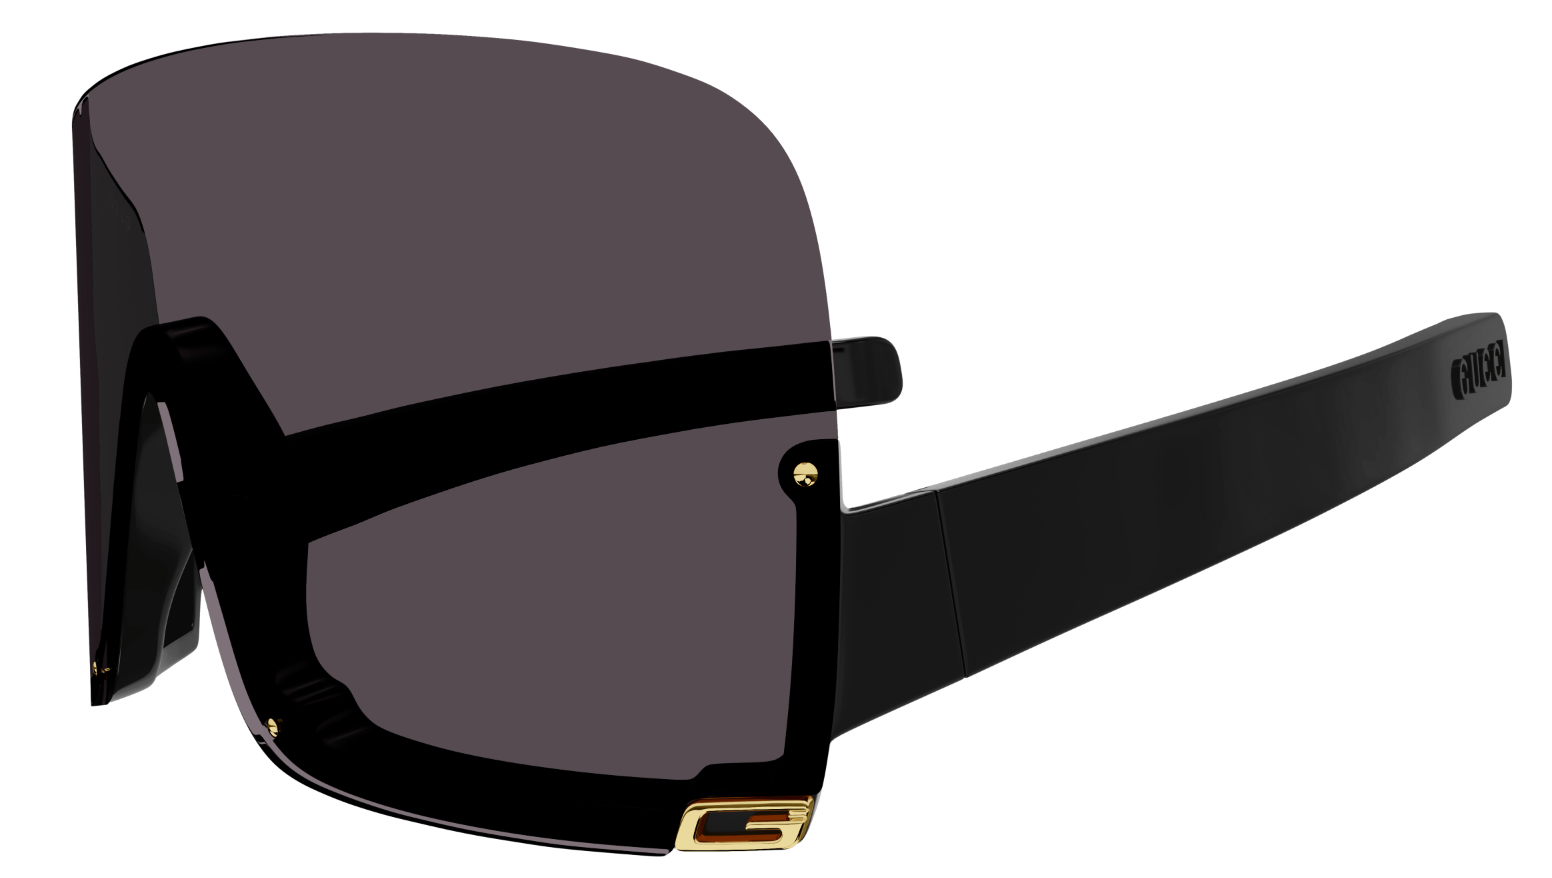 Gucci GG1631S 004 Mask Frame Black/Grey Women's Sunglasses